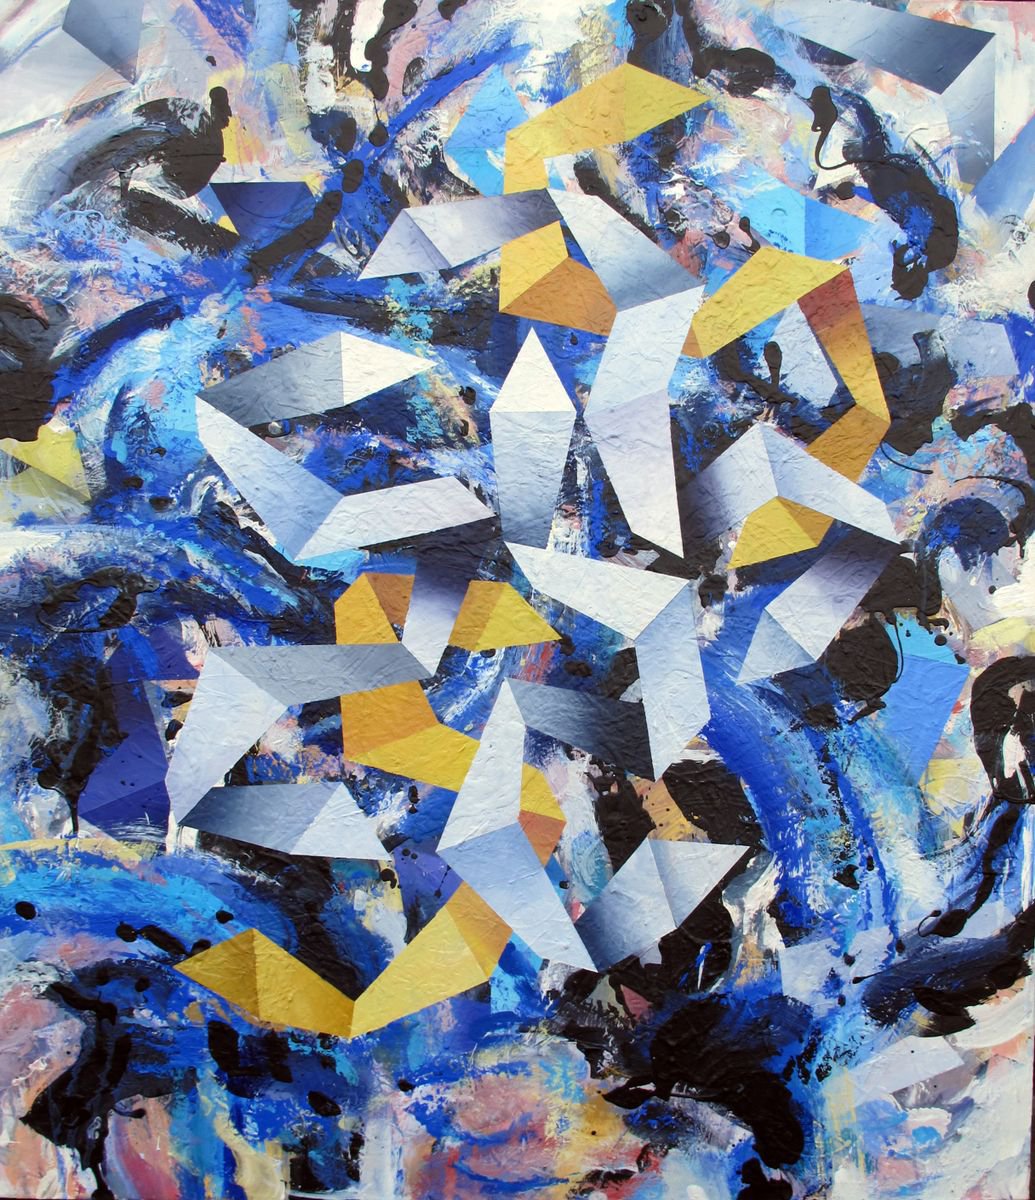 Kites, Blue Fall by John Sharp